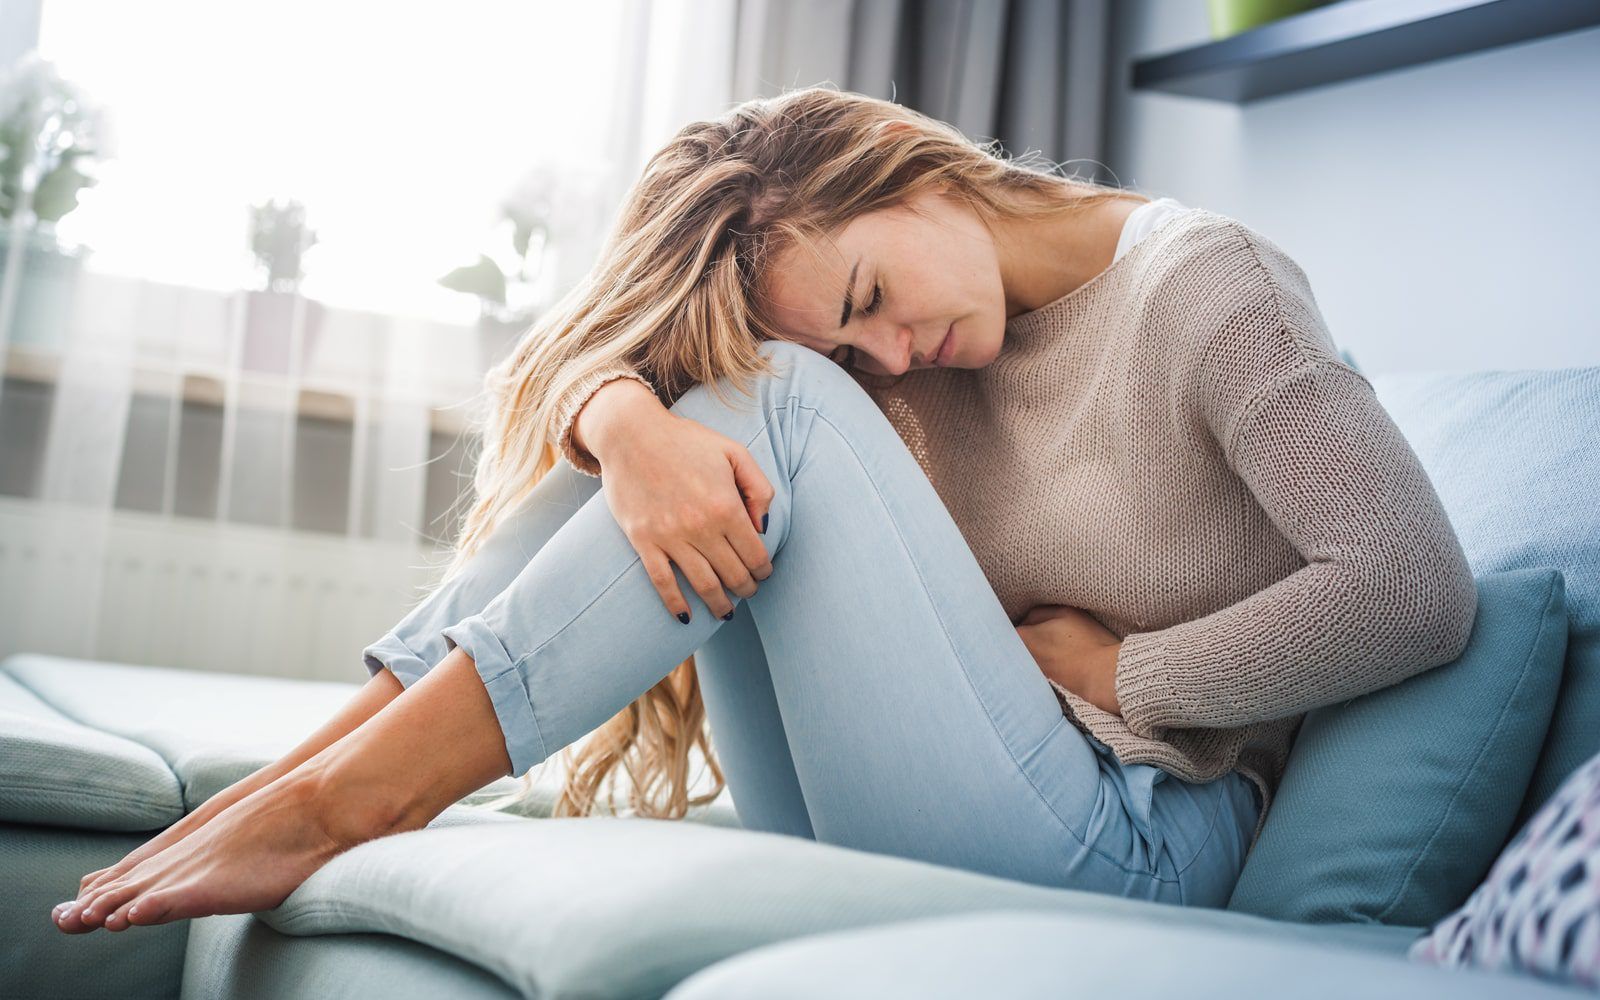 Woman suffering from PMS Symptoms